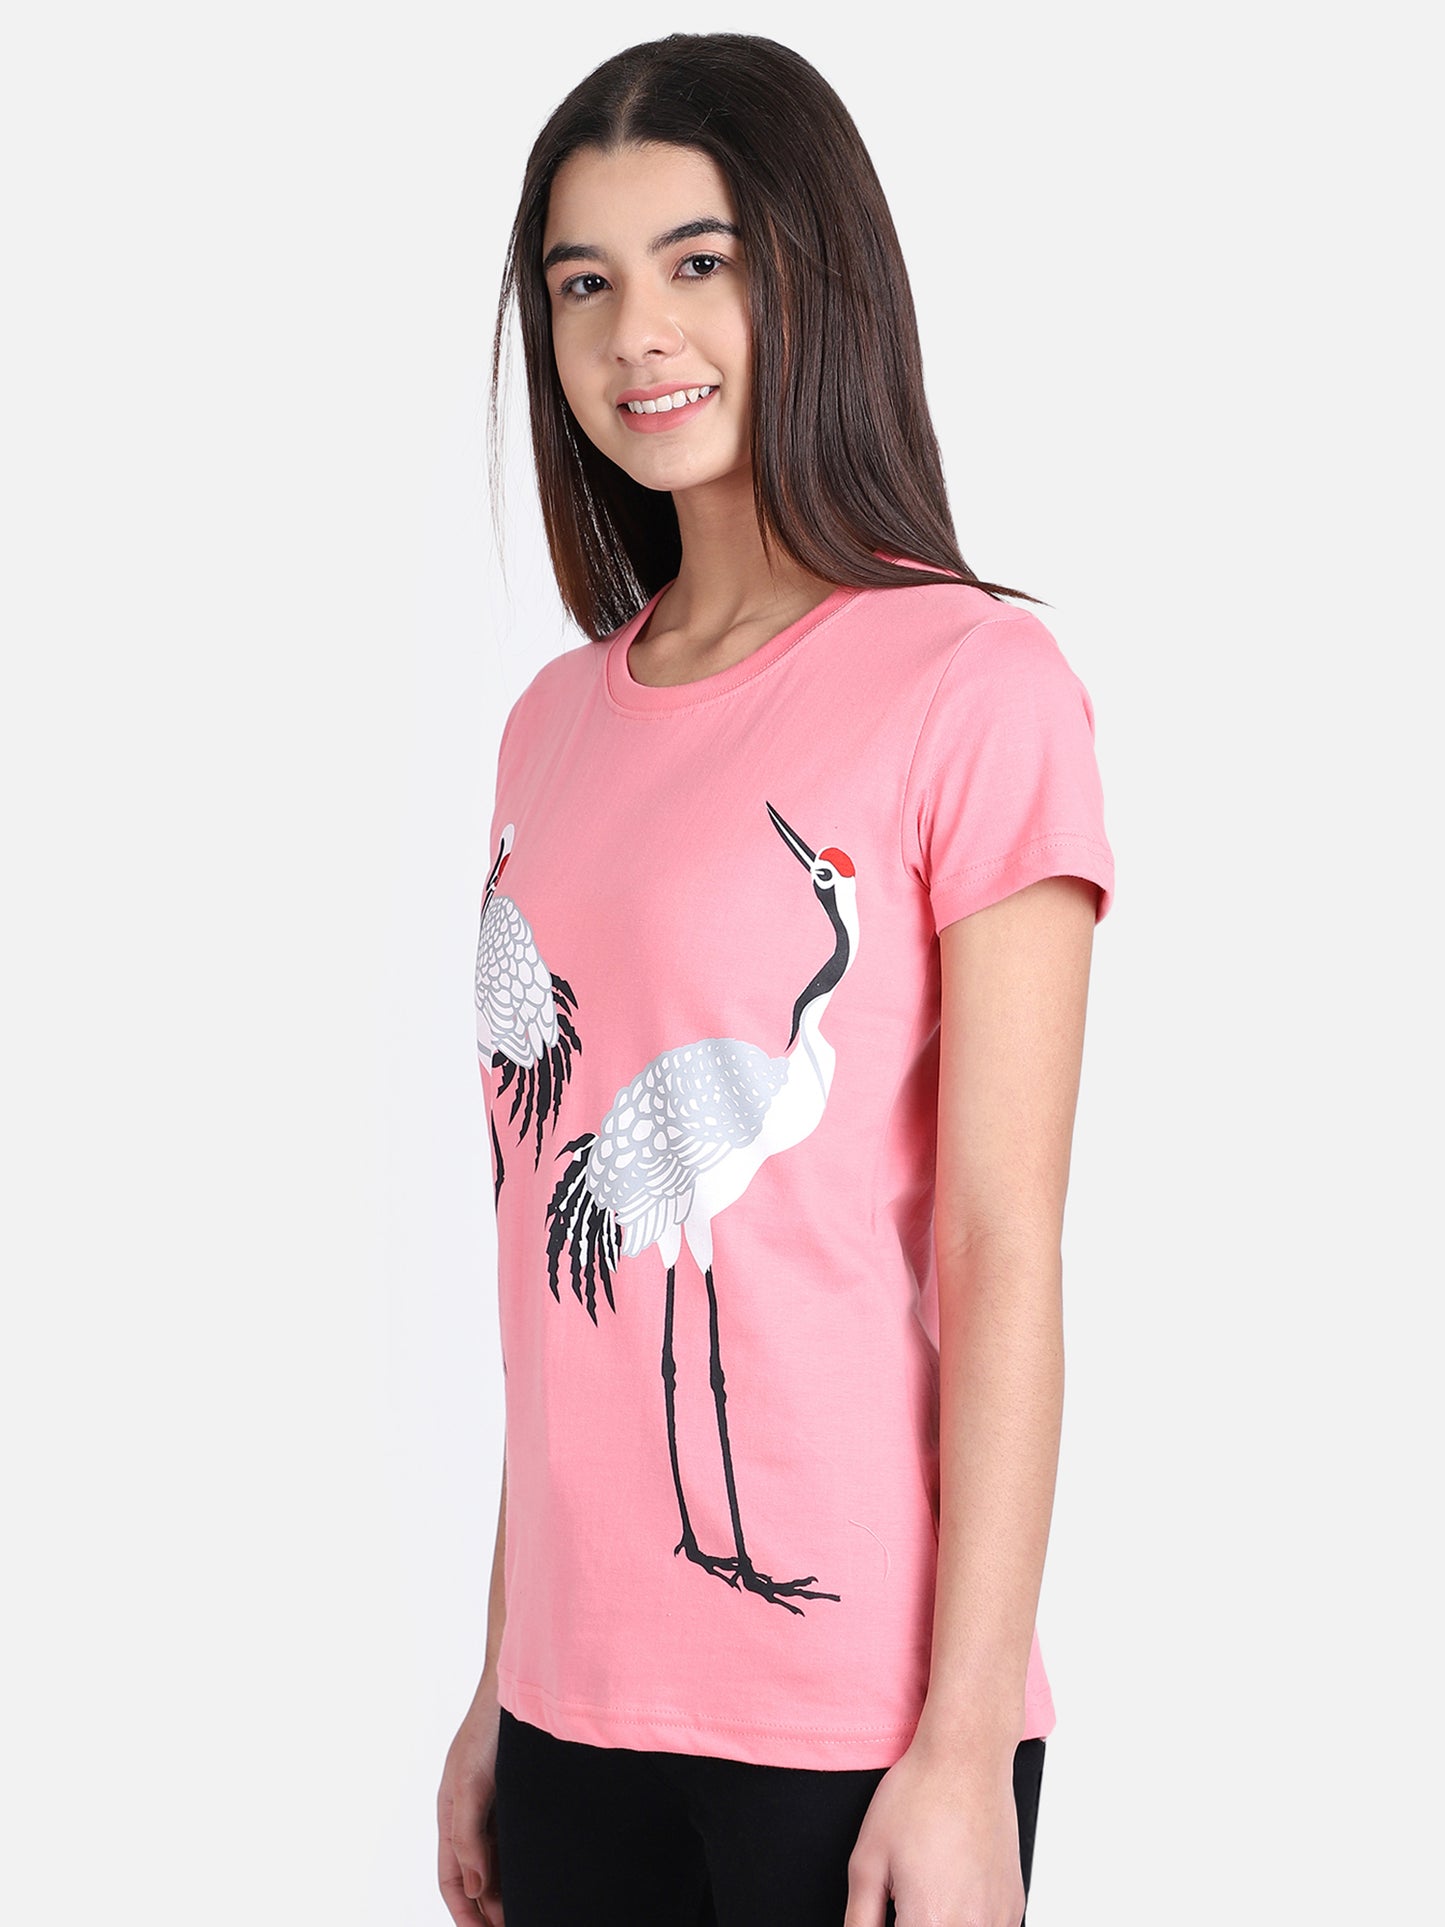 Women's Printed T-shirt (Bird)